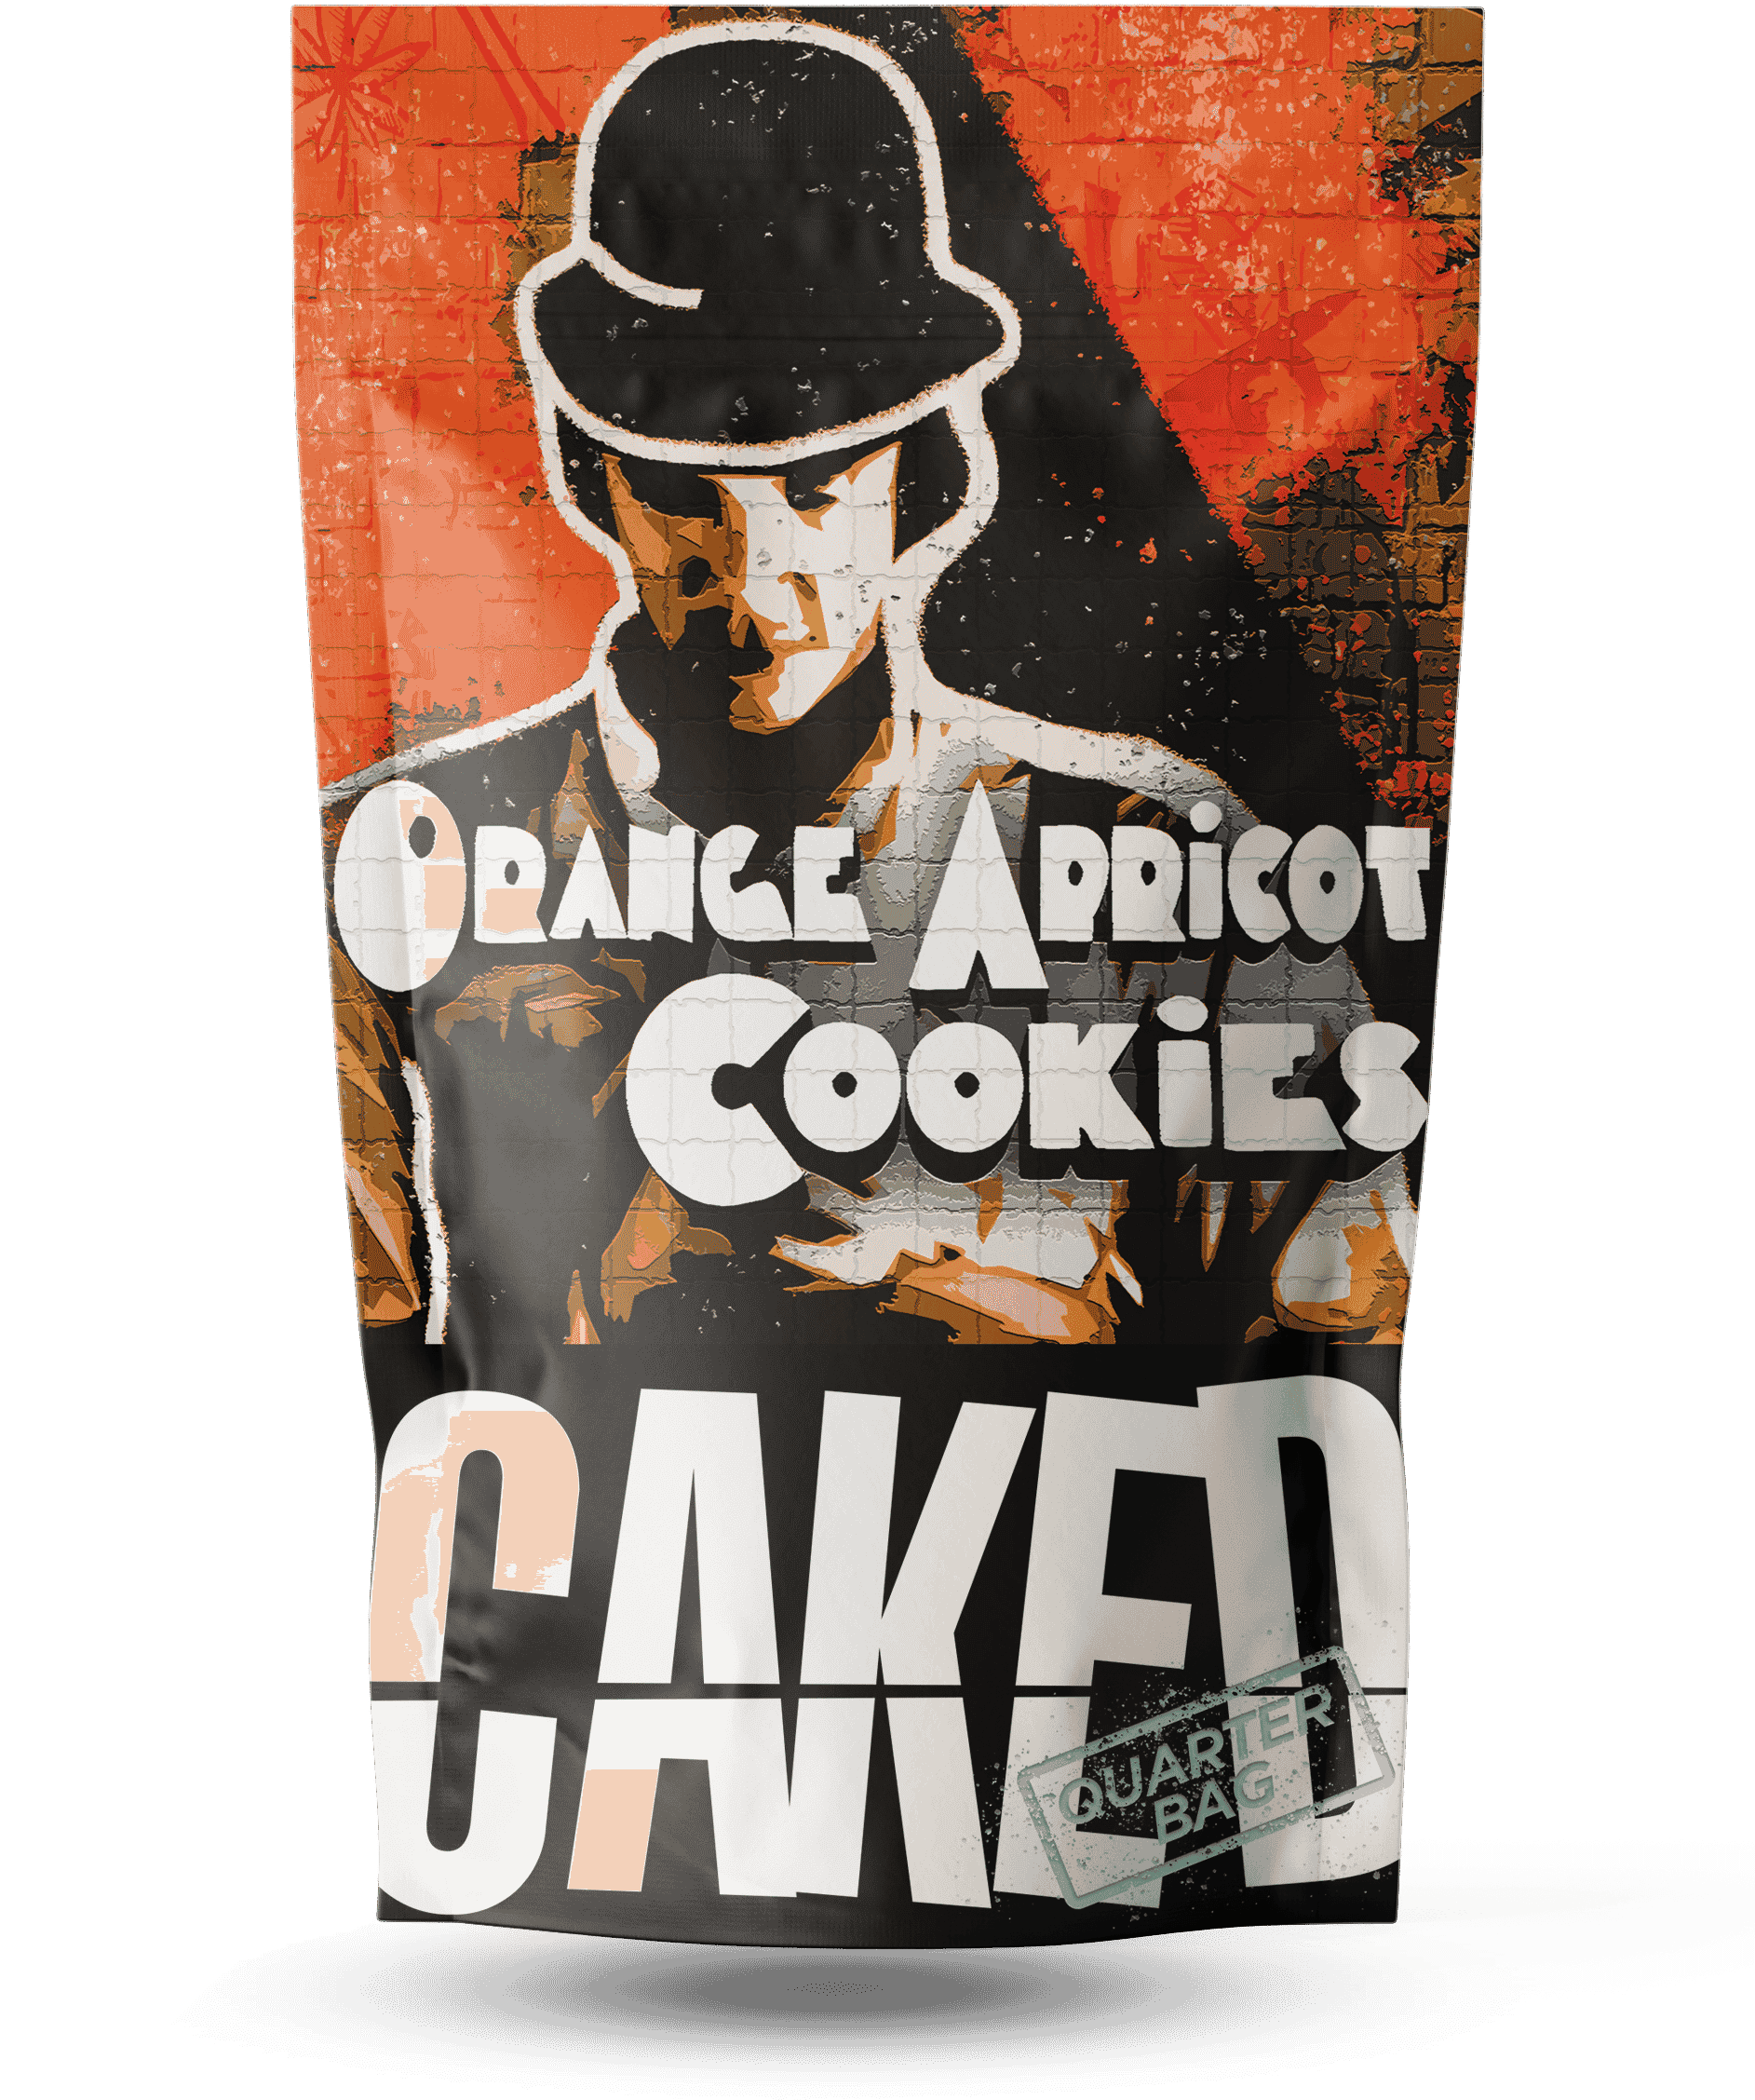 CAKED Orange Apricot Cookies Strain